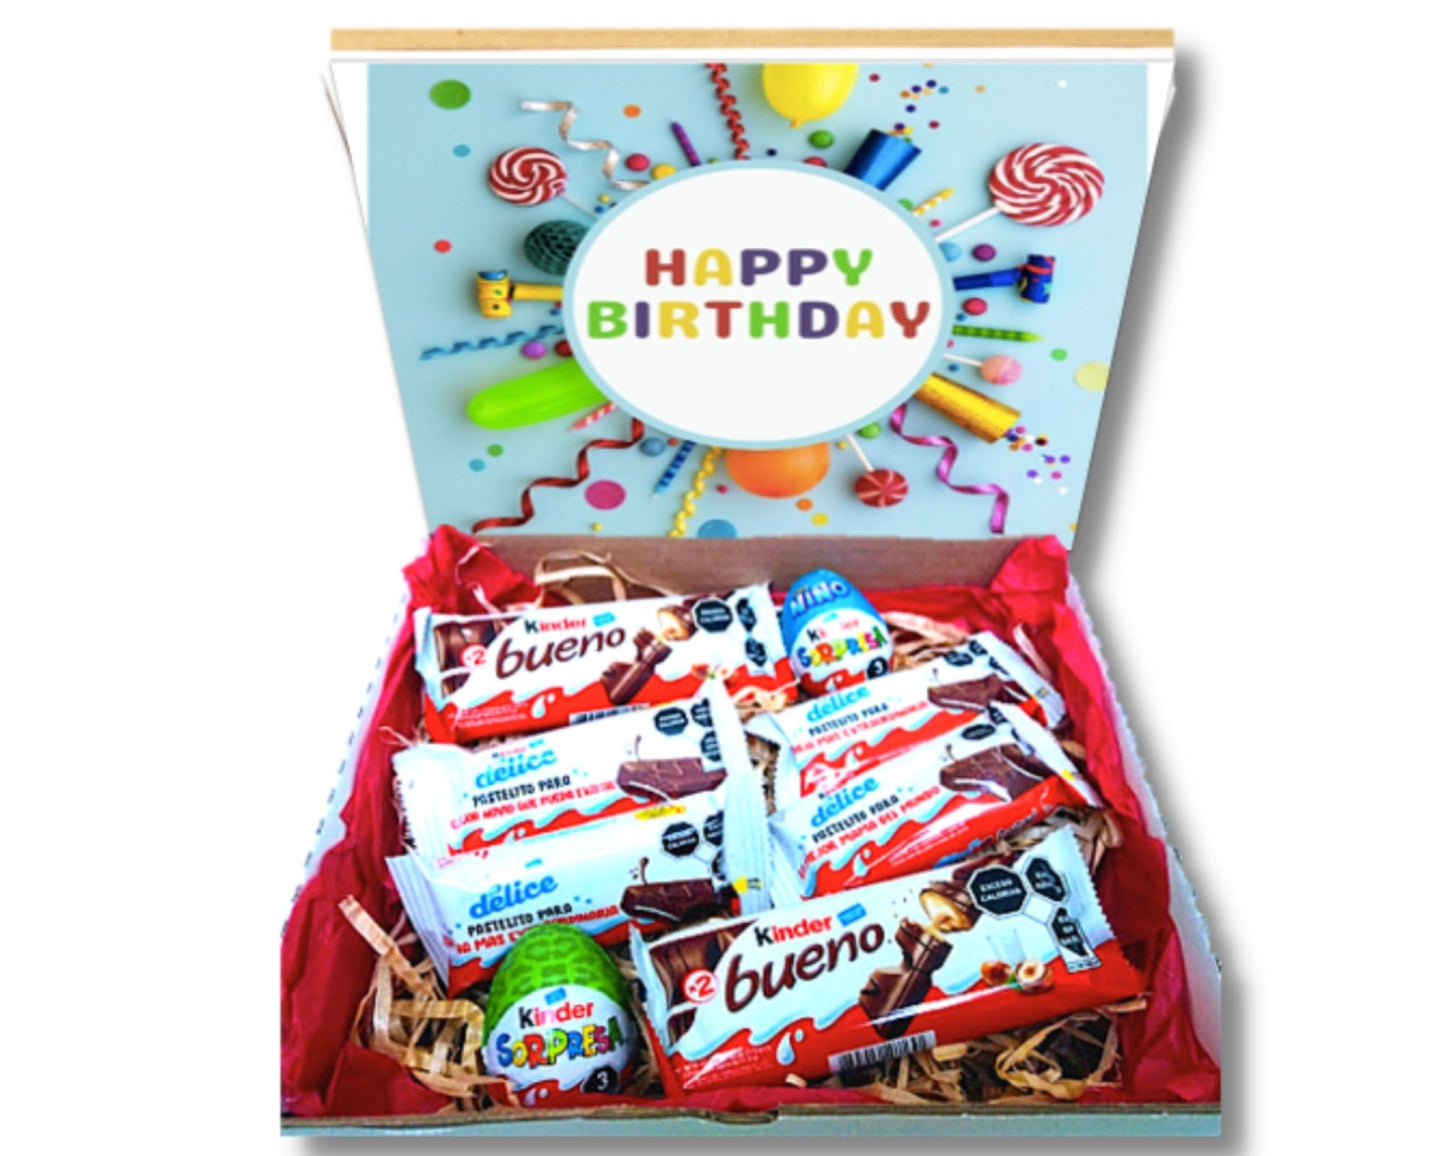 kinder sorpresa caja sorpresa con chocolates kinder sorpresa de cumpleaños a domicilio 